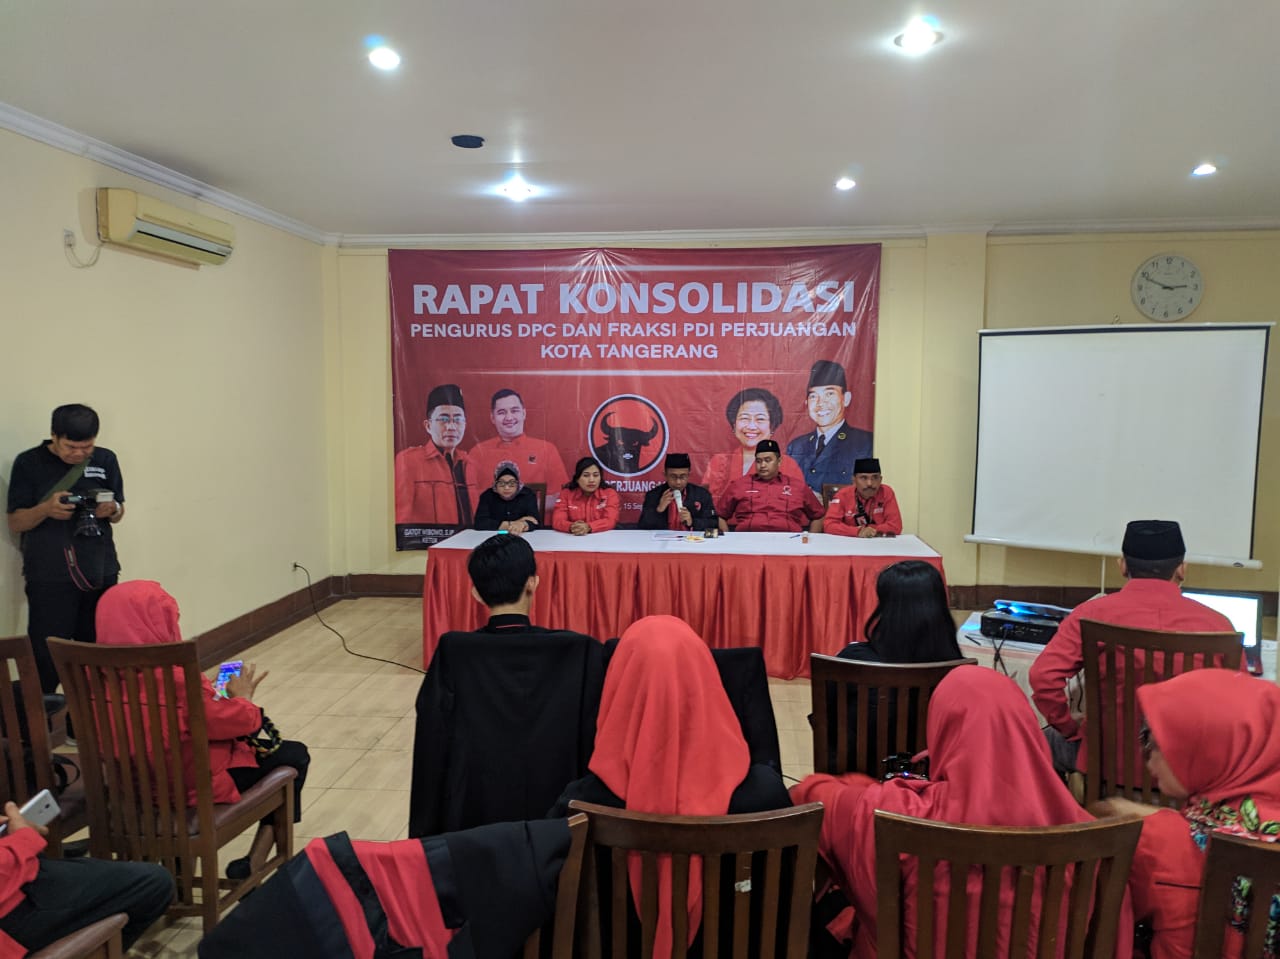 Rapat konsolidasi pengurus DPC dan Fraksi PDI Perjuangan Kota Tangerang.(ayip)